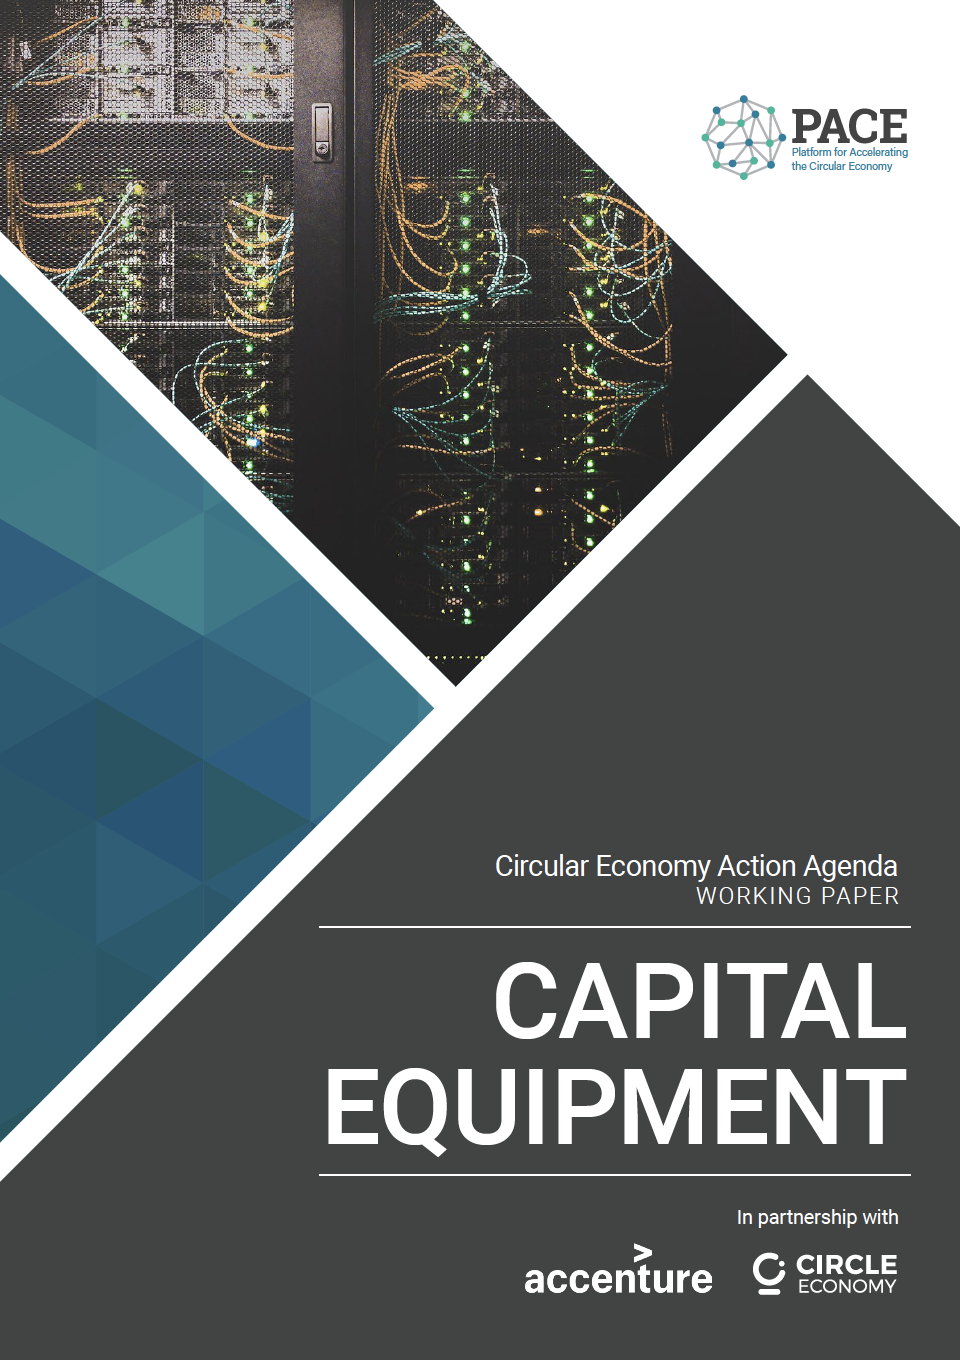 The Circular Economy Action Agenda for Capital Equipment